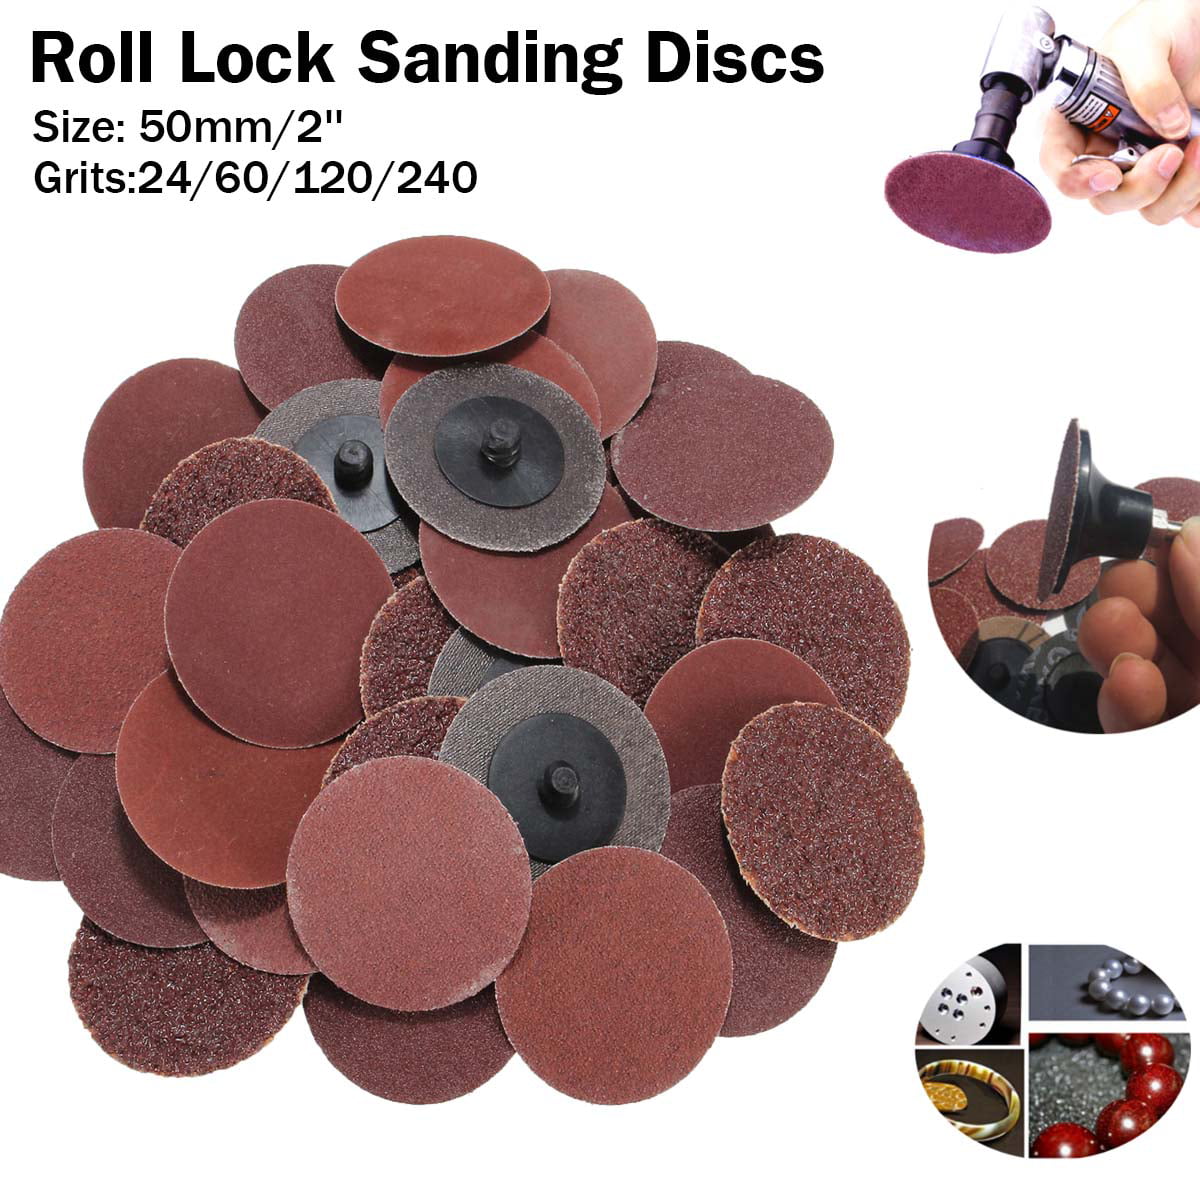 2" Roll Lock Mandrel Sanding Disc Roloc Type R Pad Holder Arbor NEW FREE SHIPING 